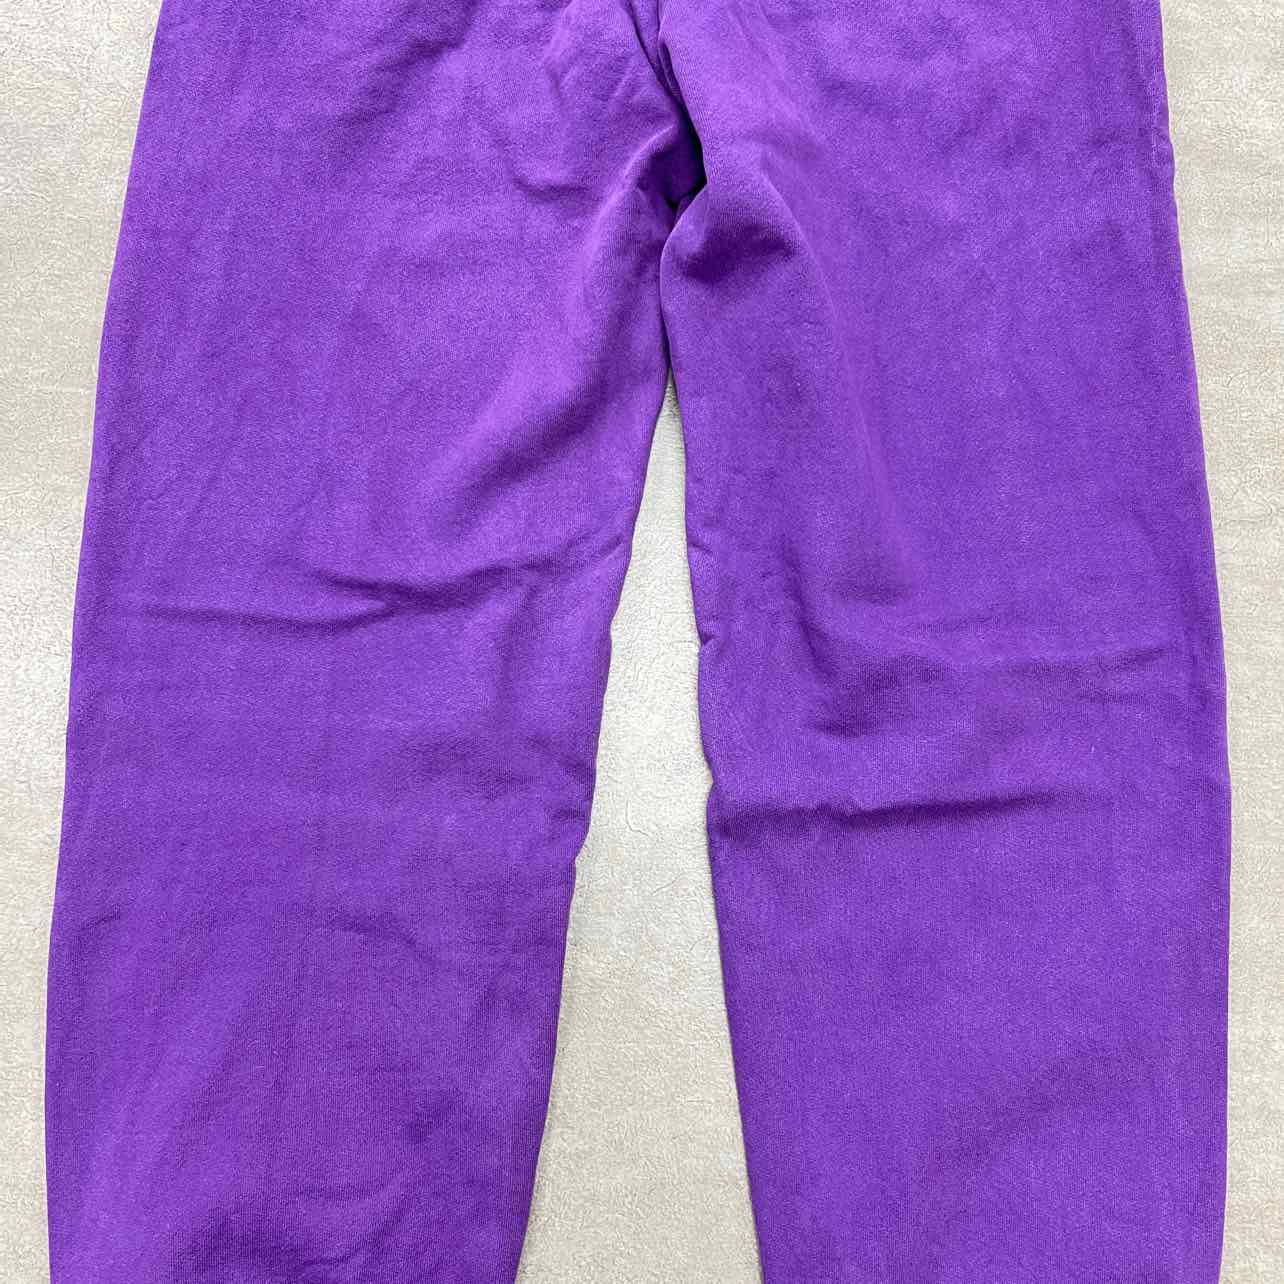 Sp5der Sweatpants "CLASSIC" Purple Used Size XL